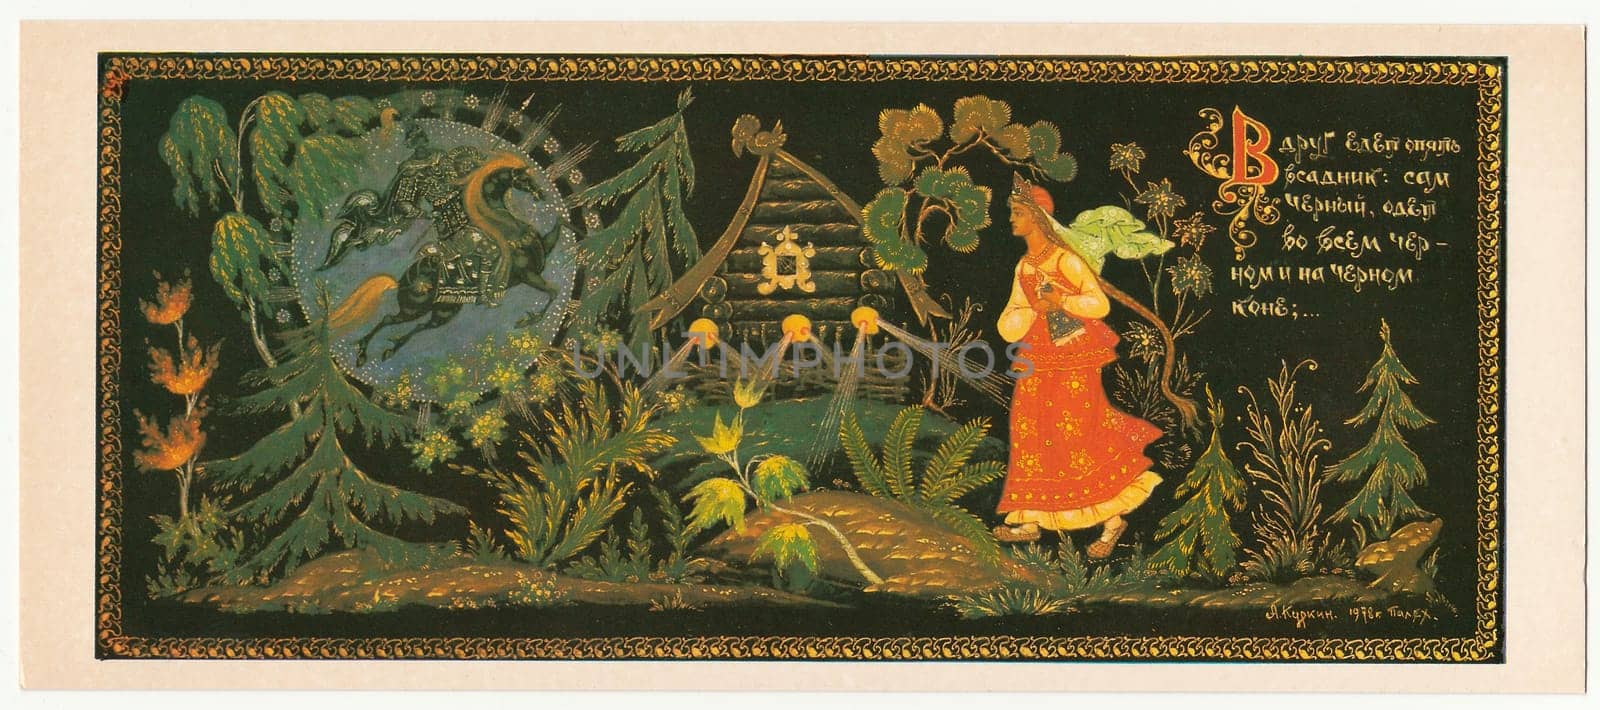 Card describes the part of classic Russian fairy tale - Vasilisa prekrasnaja (Pretty Vasilisa). by roman_nerud